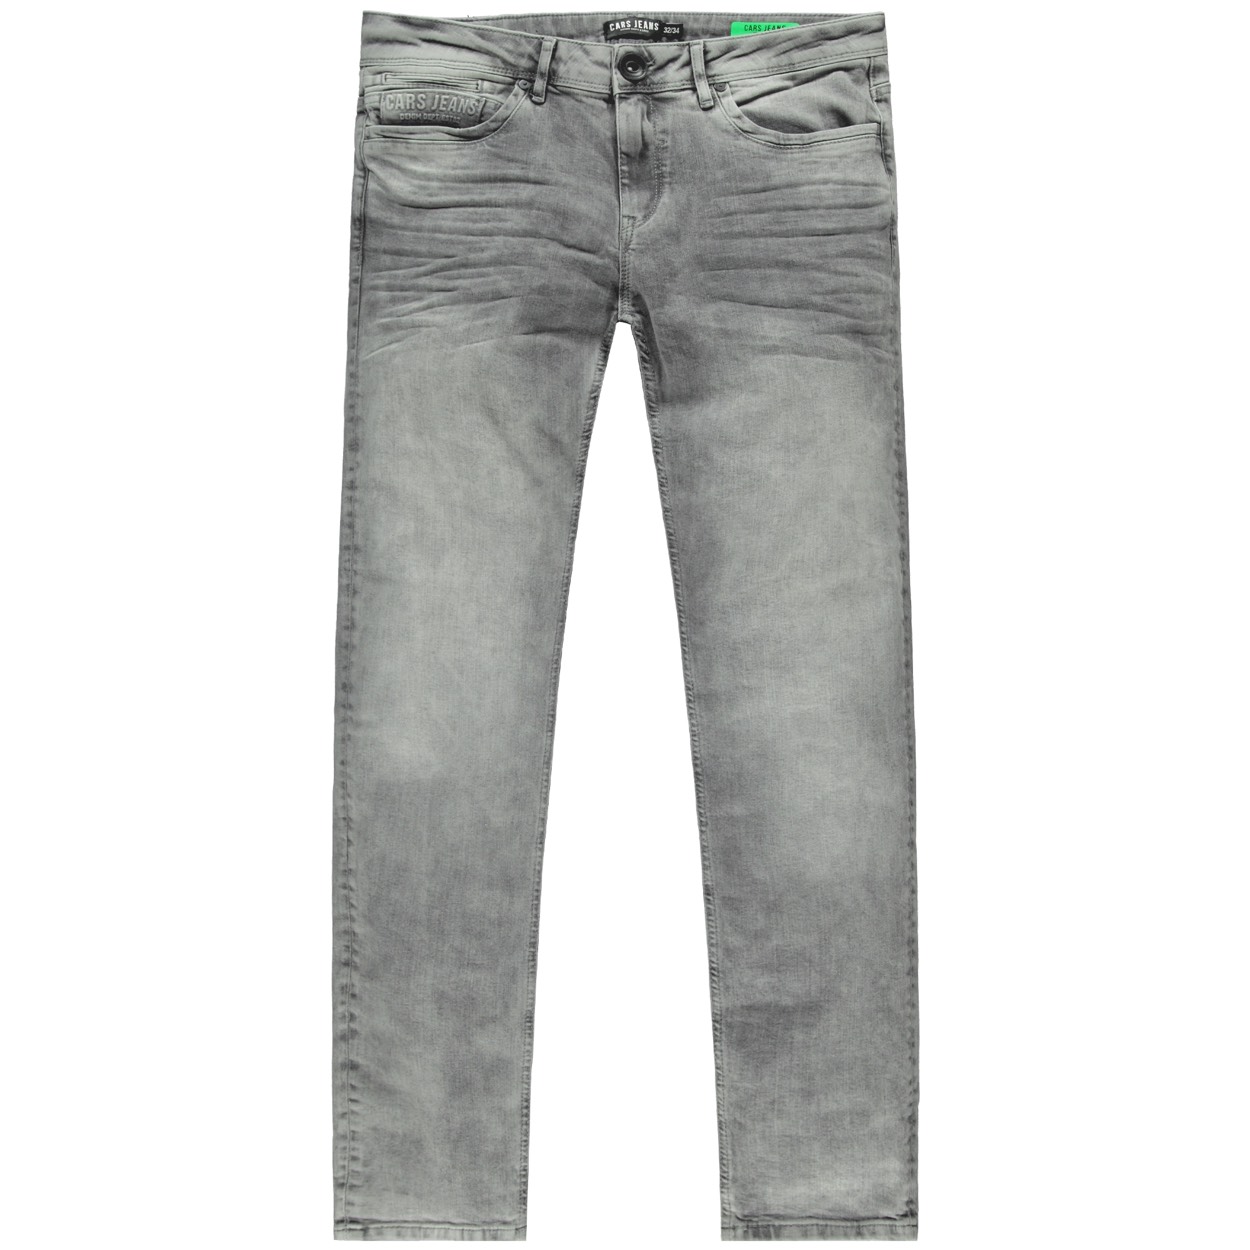 Cars heren > jeans 5102.86.0241 grey denim